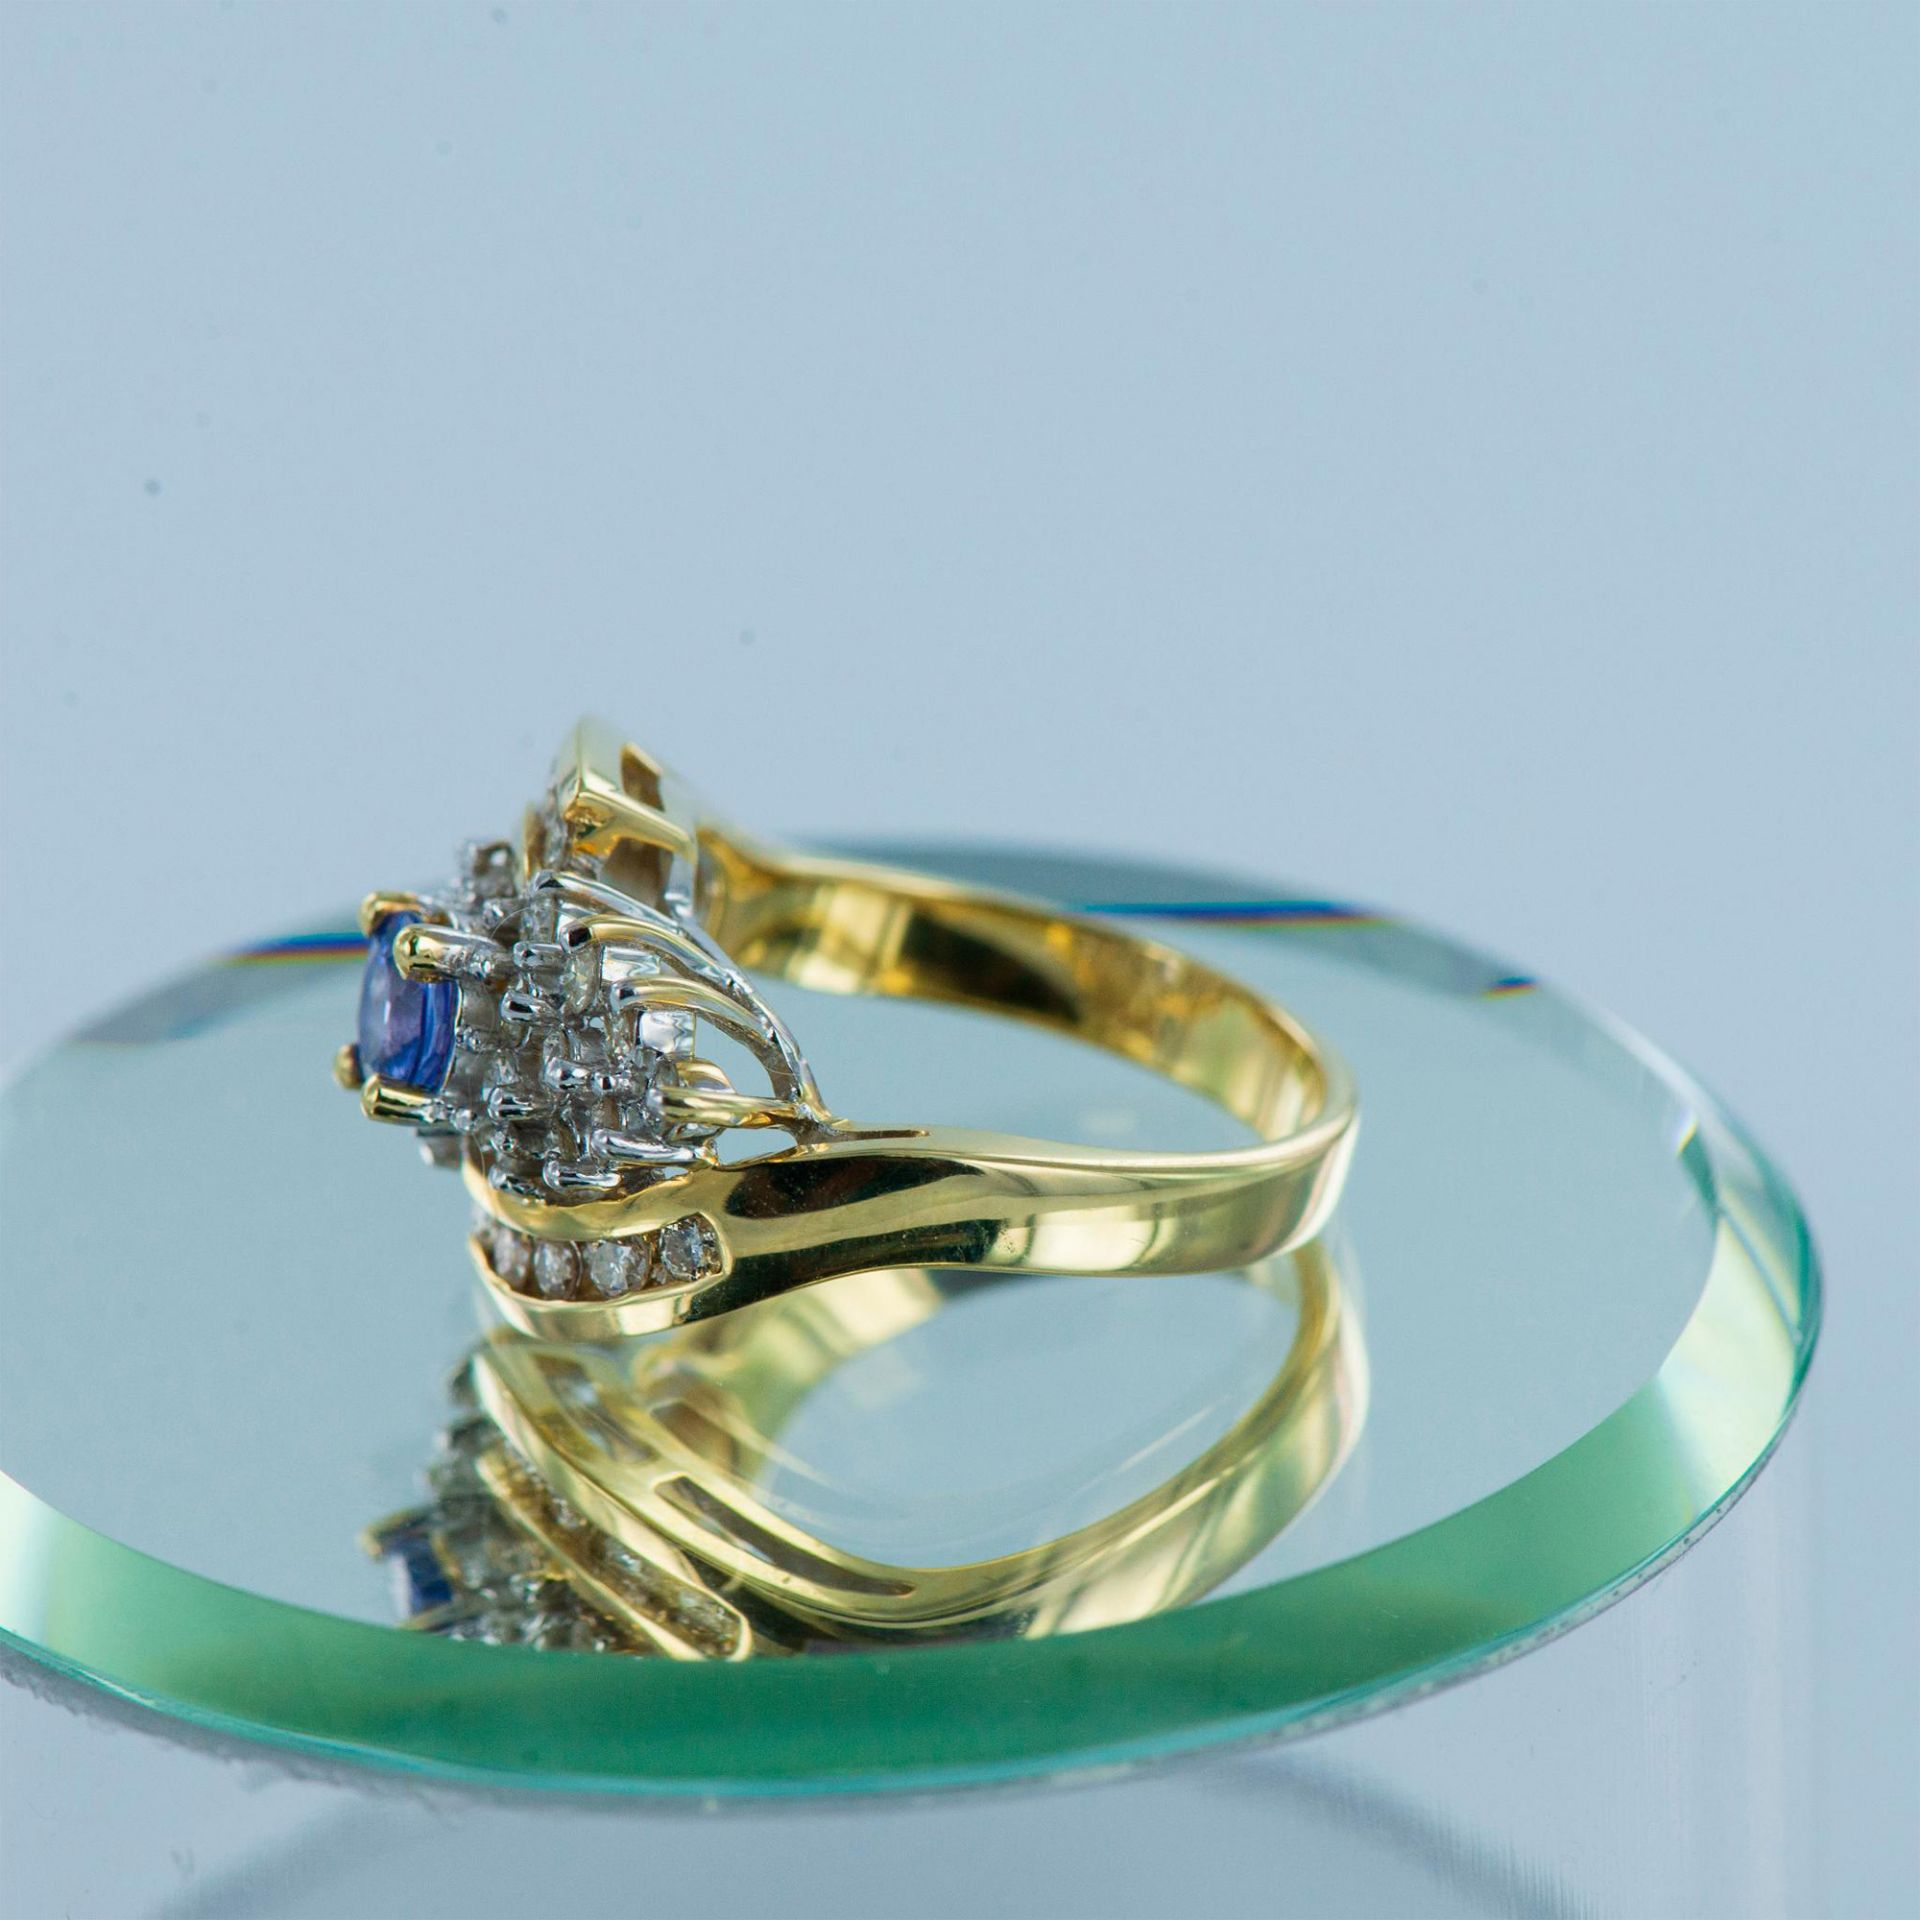 Stunning LeVian 14K Yellow Gold, Diamond, and Amethyst Ring - Image 5 of 10